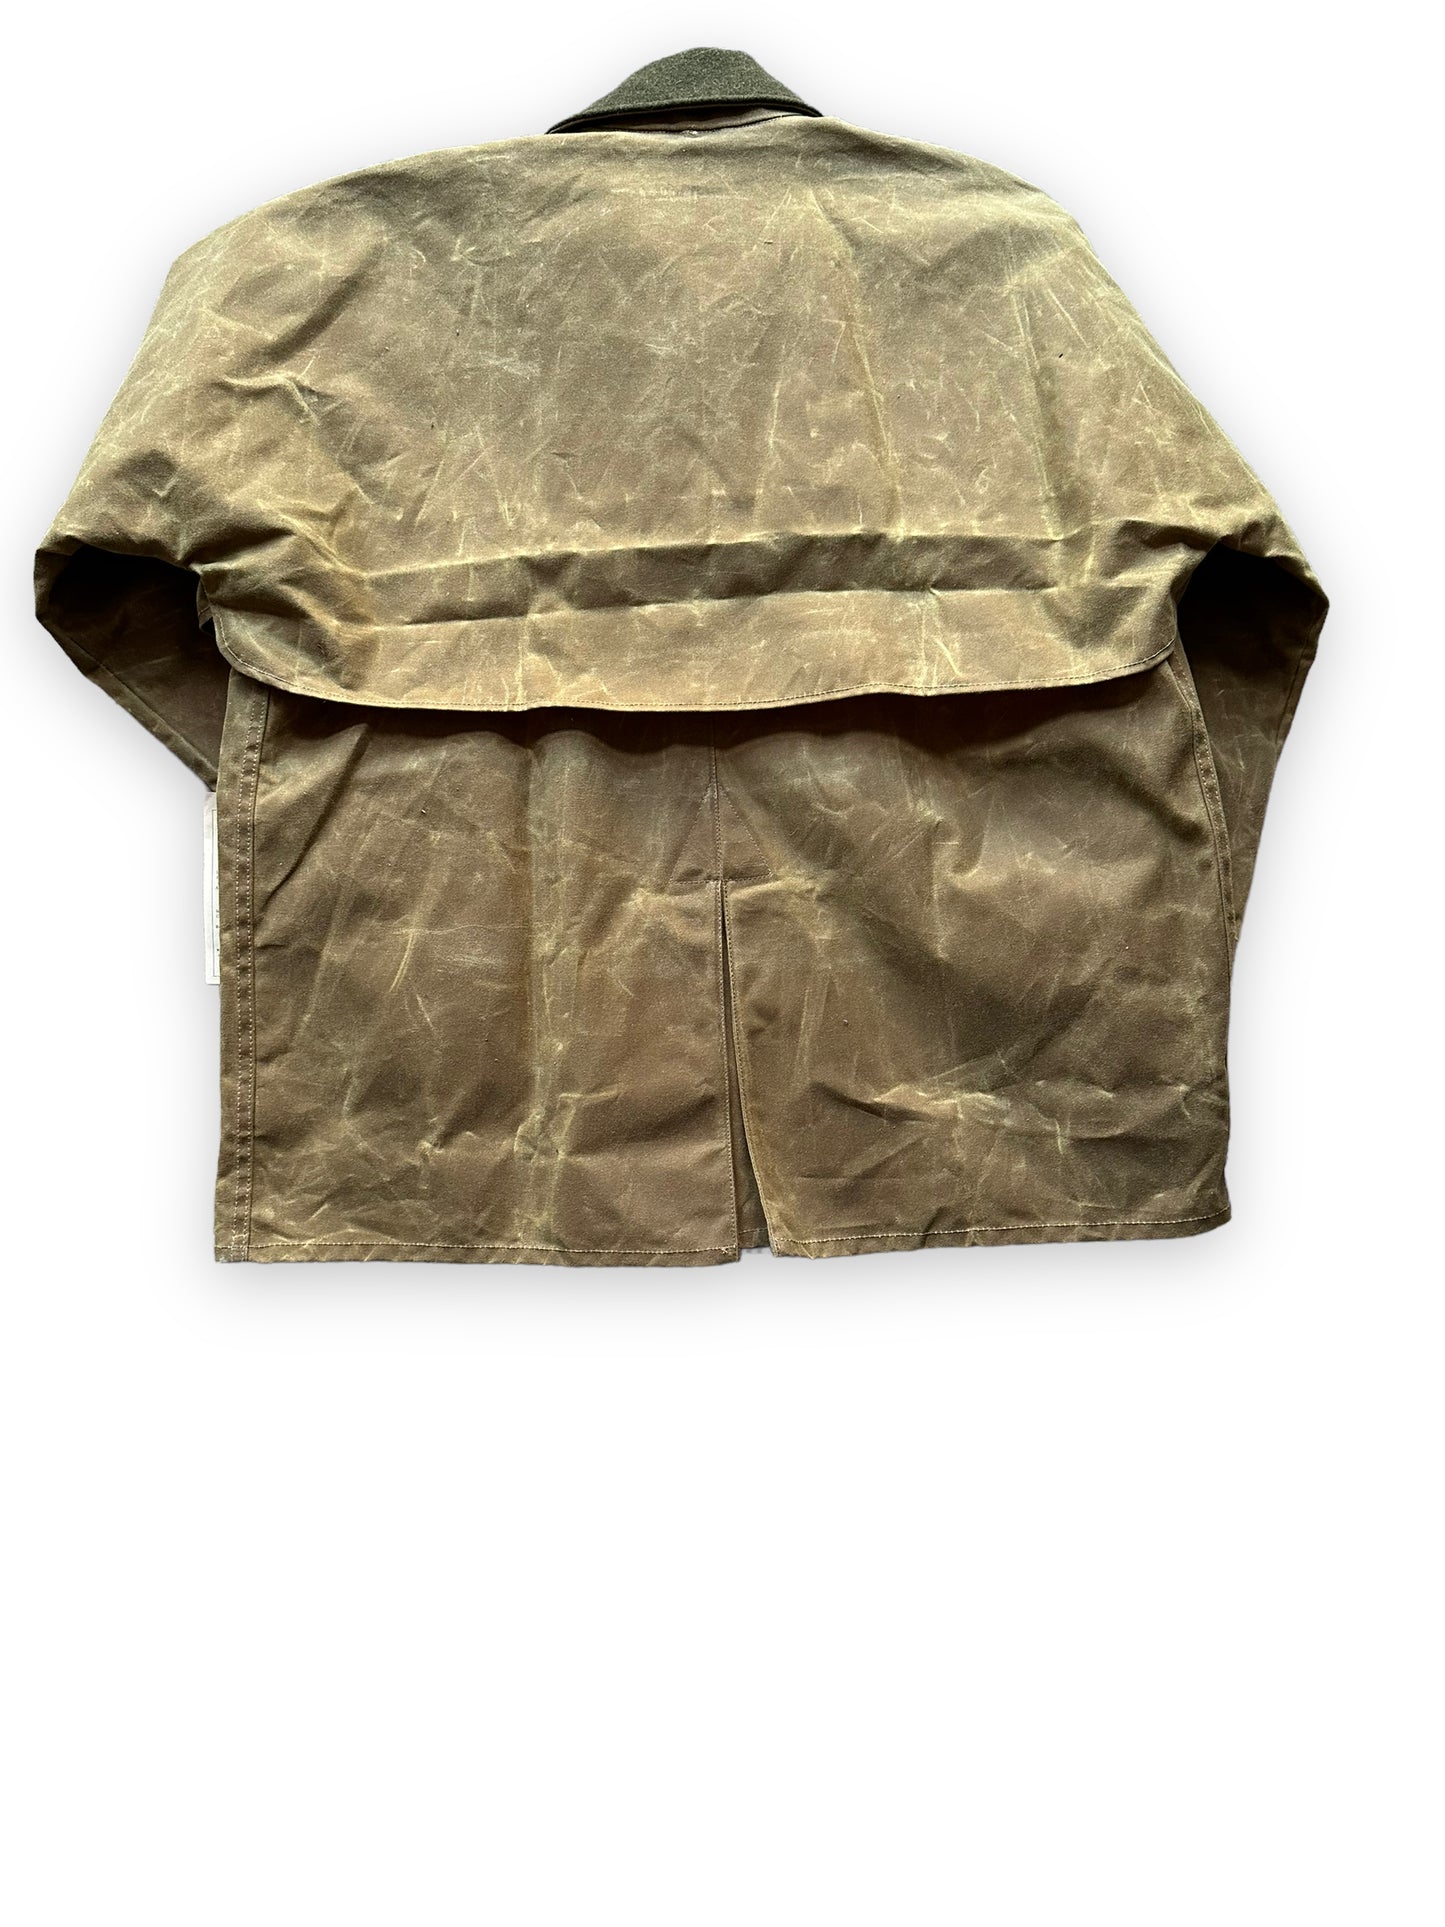 Rear View of NWT Filson Tin Packer Coat SZ XL |  Barn Owl Vintage Goods Filson | Vintage Filson Tin Cloth Workwear Seattle